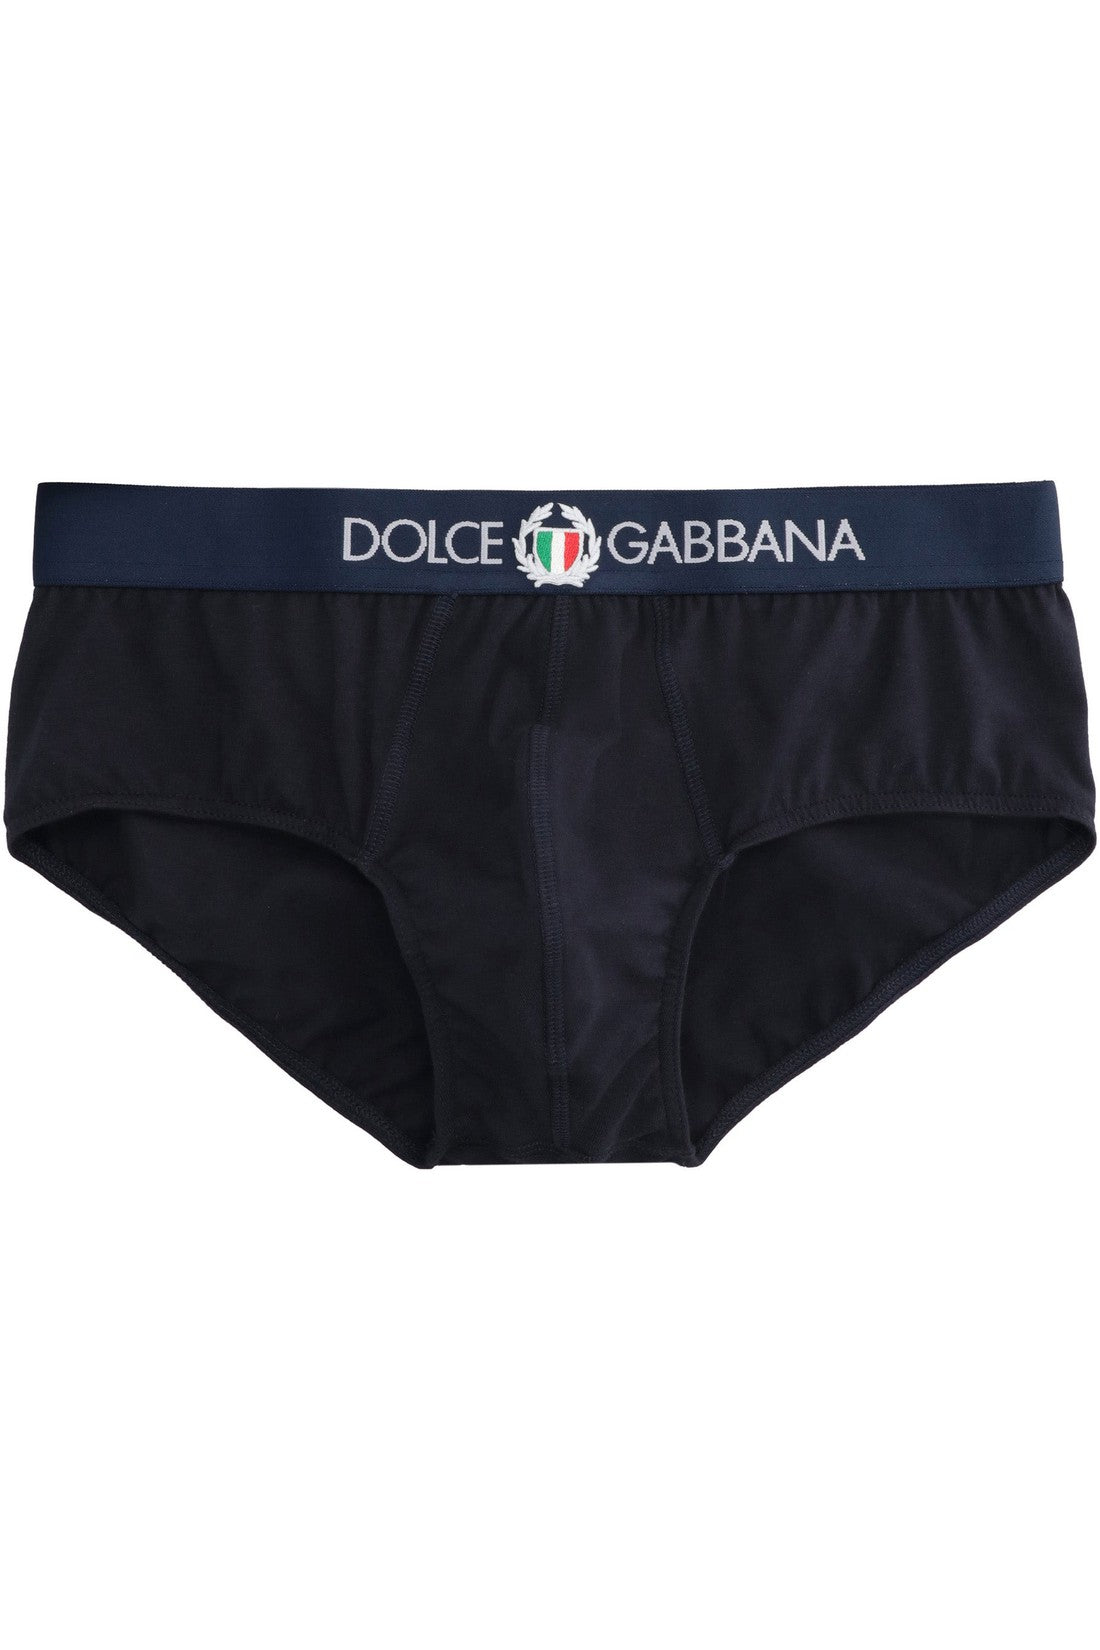 Dolce & Gabbana-OUTLET-SALE-Brando logoed elastic band cotton briefs-ARCHIVIST